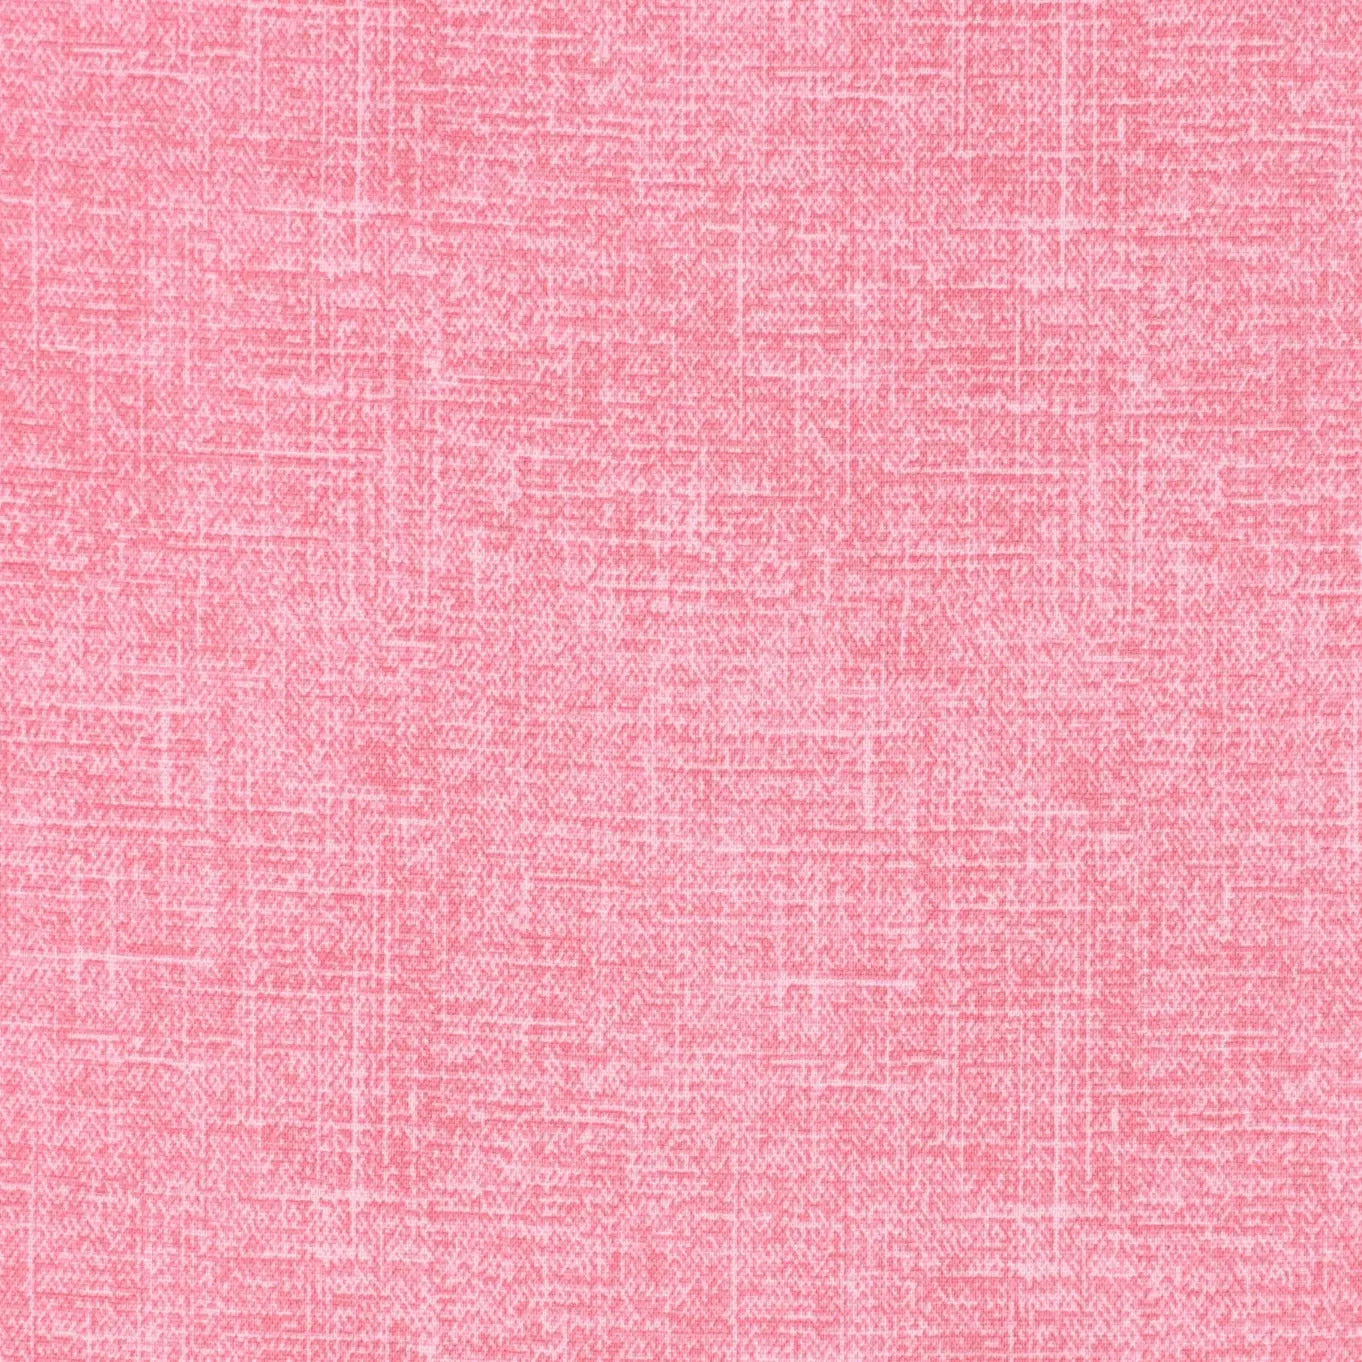 Pink Light Grain of Color Cotton Wideback Fabric per yard 